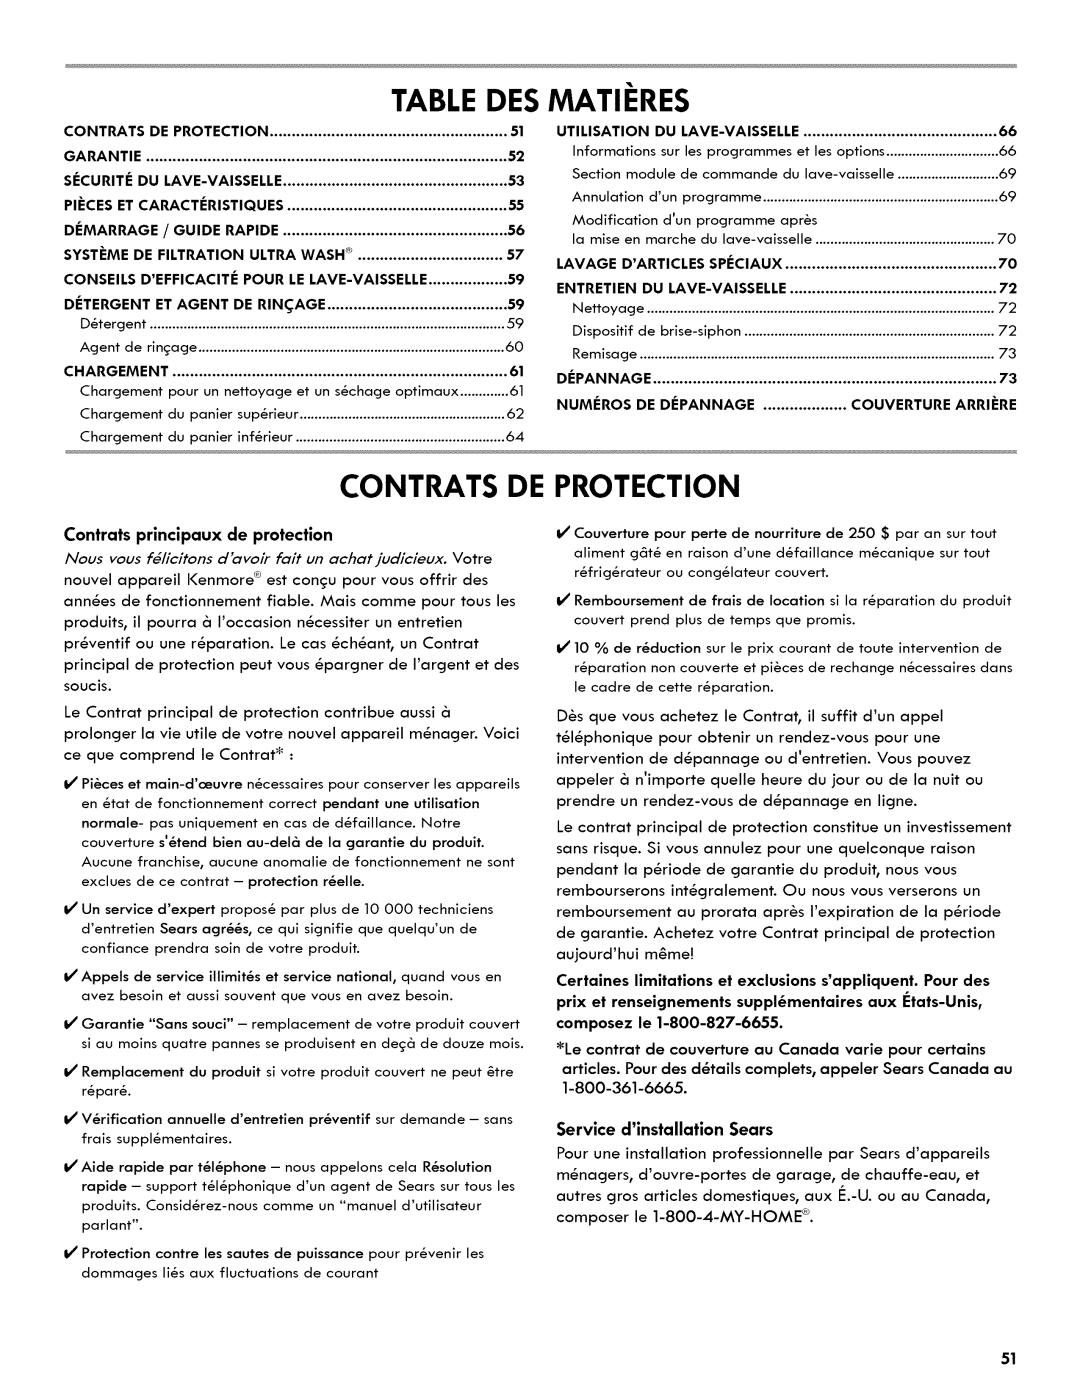 Kenmore 665.1404 manual Table Des Matieres, Contrats De Protection, Contrats principaux de protection 